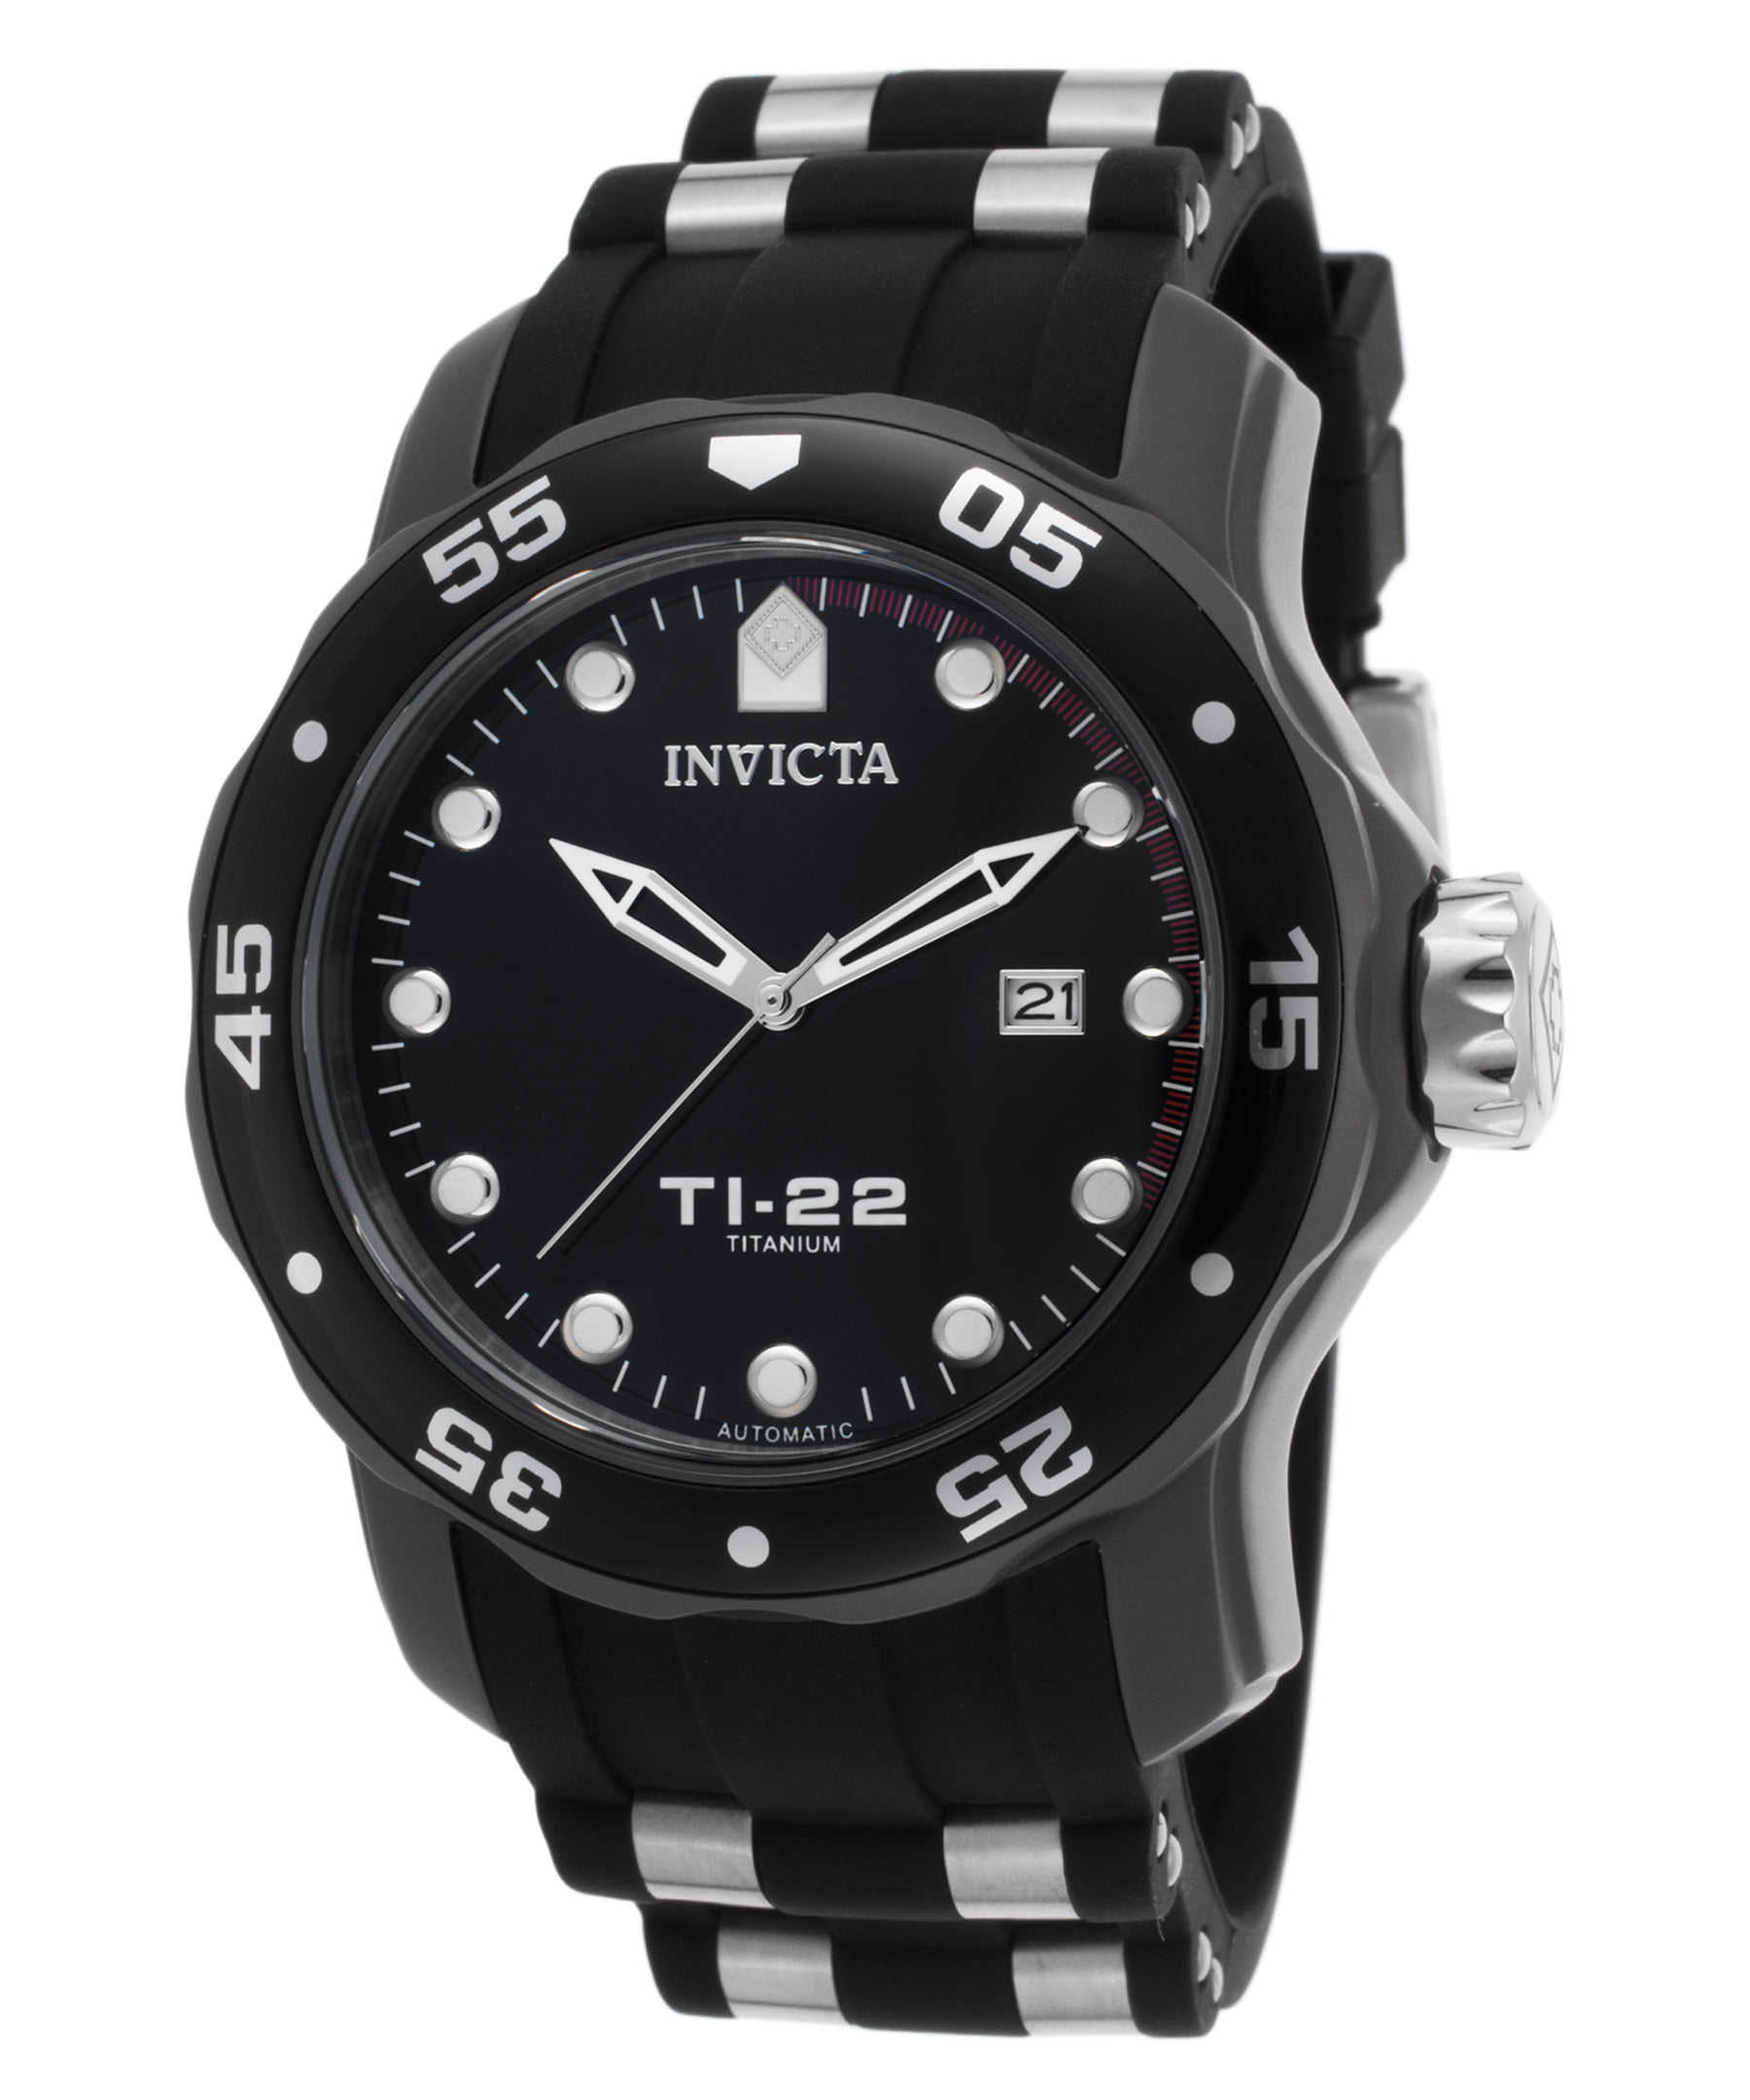 Invicta Men's 23557 Ti-22 Automatic Black Silicone Black Dial Titanium ...